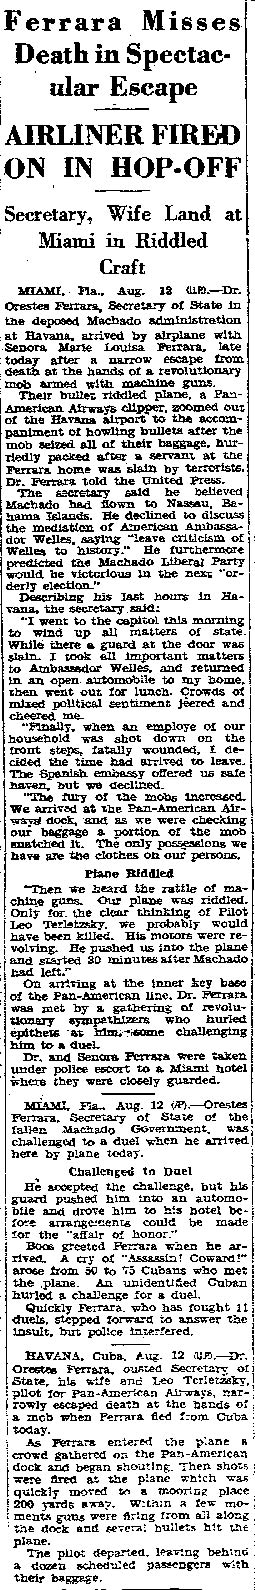 Trenton (NJ) Sunday Times-Advertiser, August 13, 1933 (Source: Woodling)